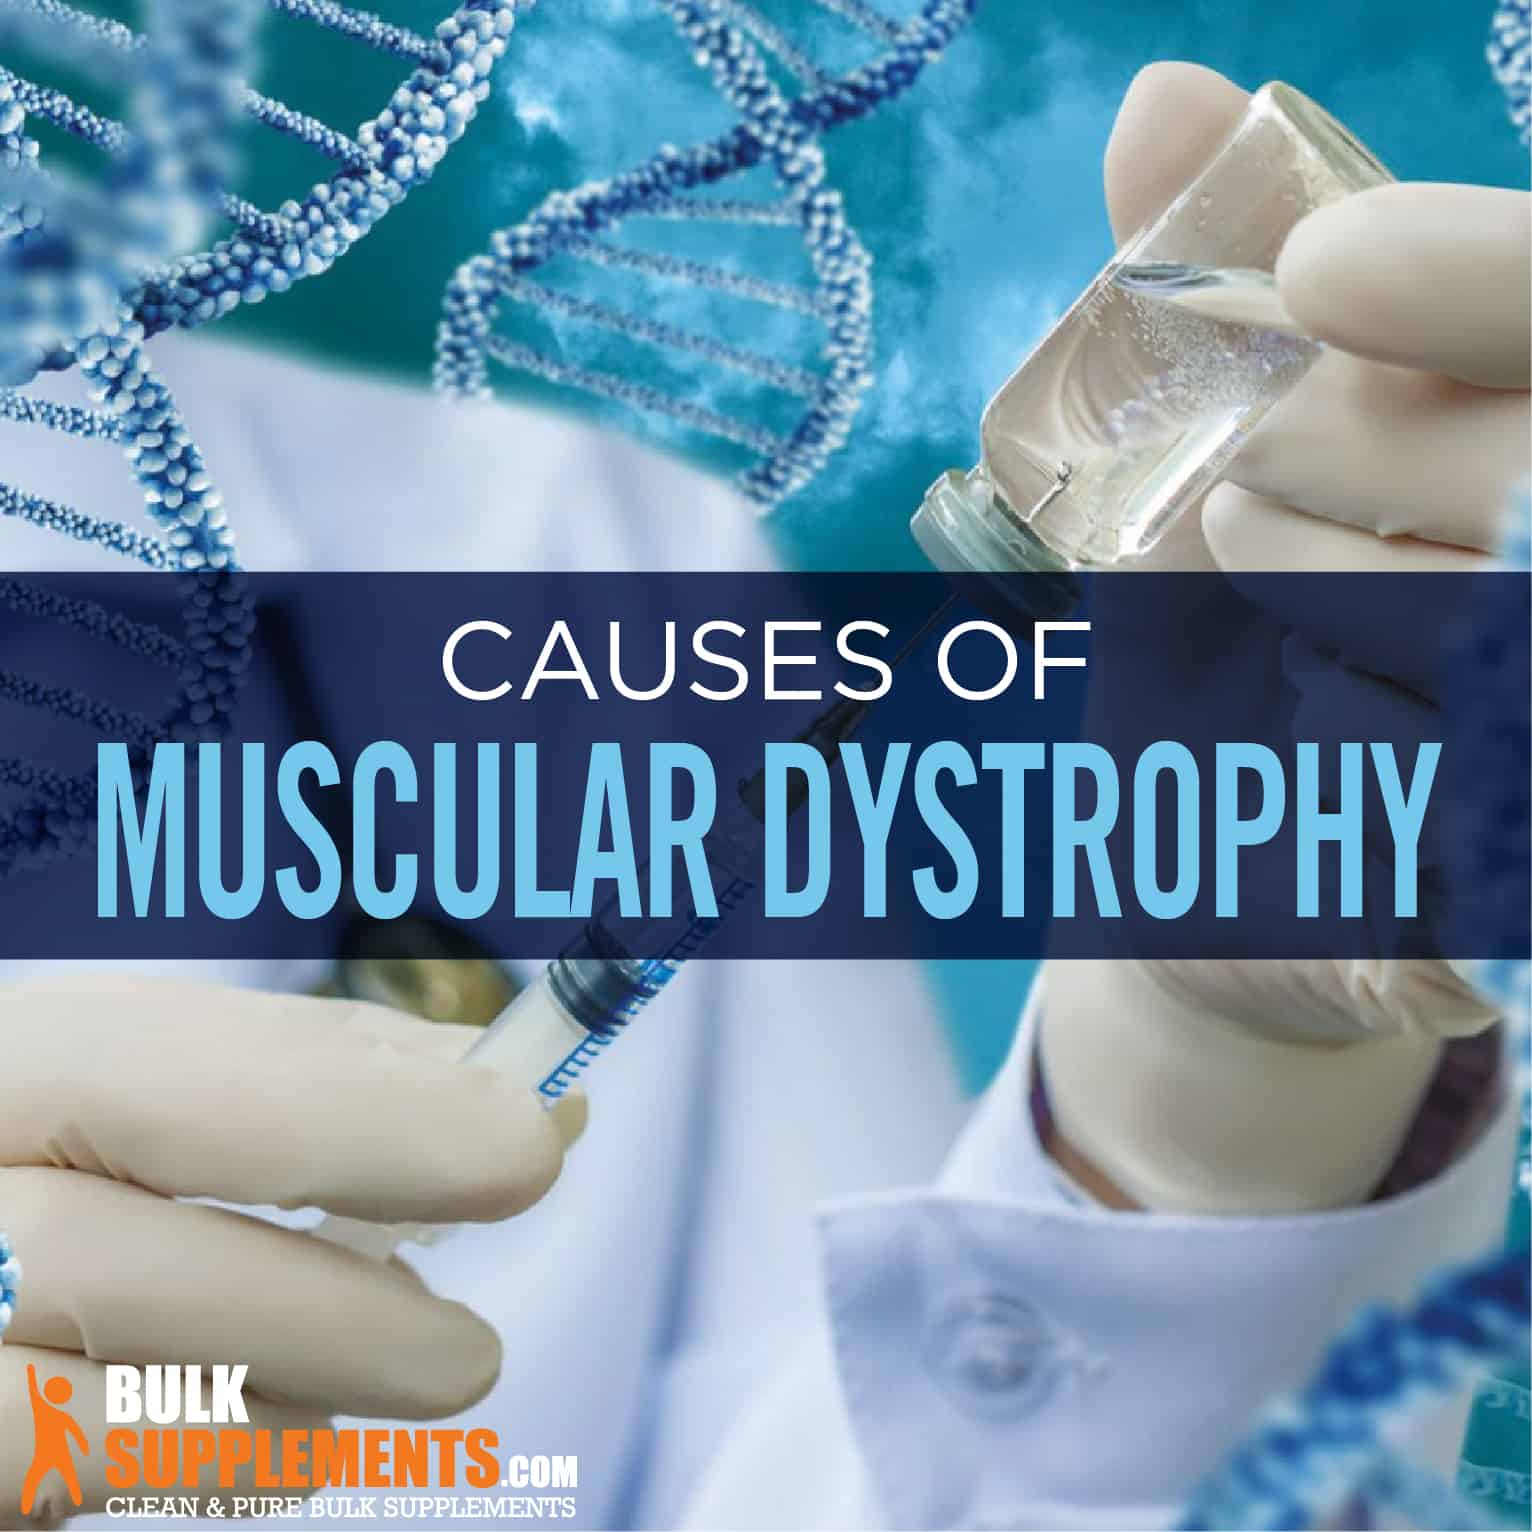 Muscular Dystrophy: Symptoms, Causes & Treatment by James Denlinger